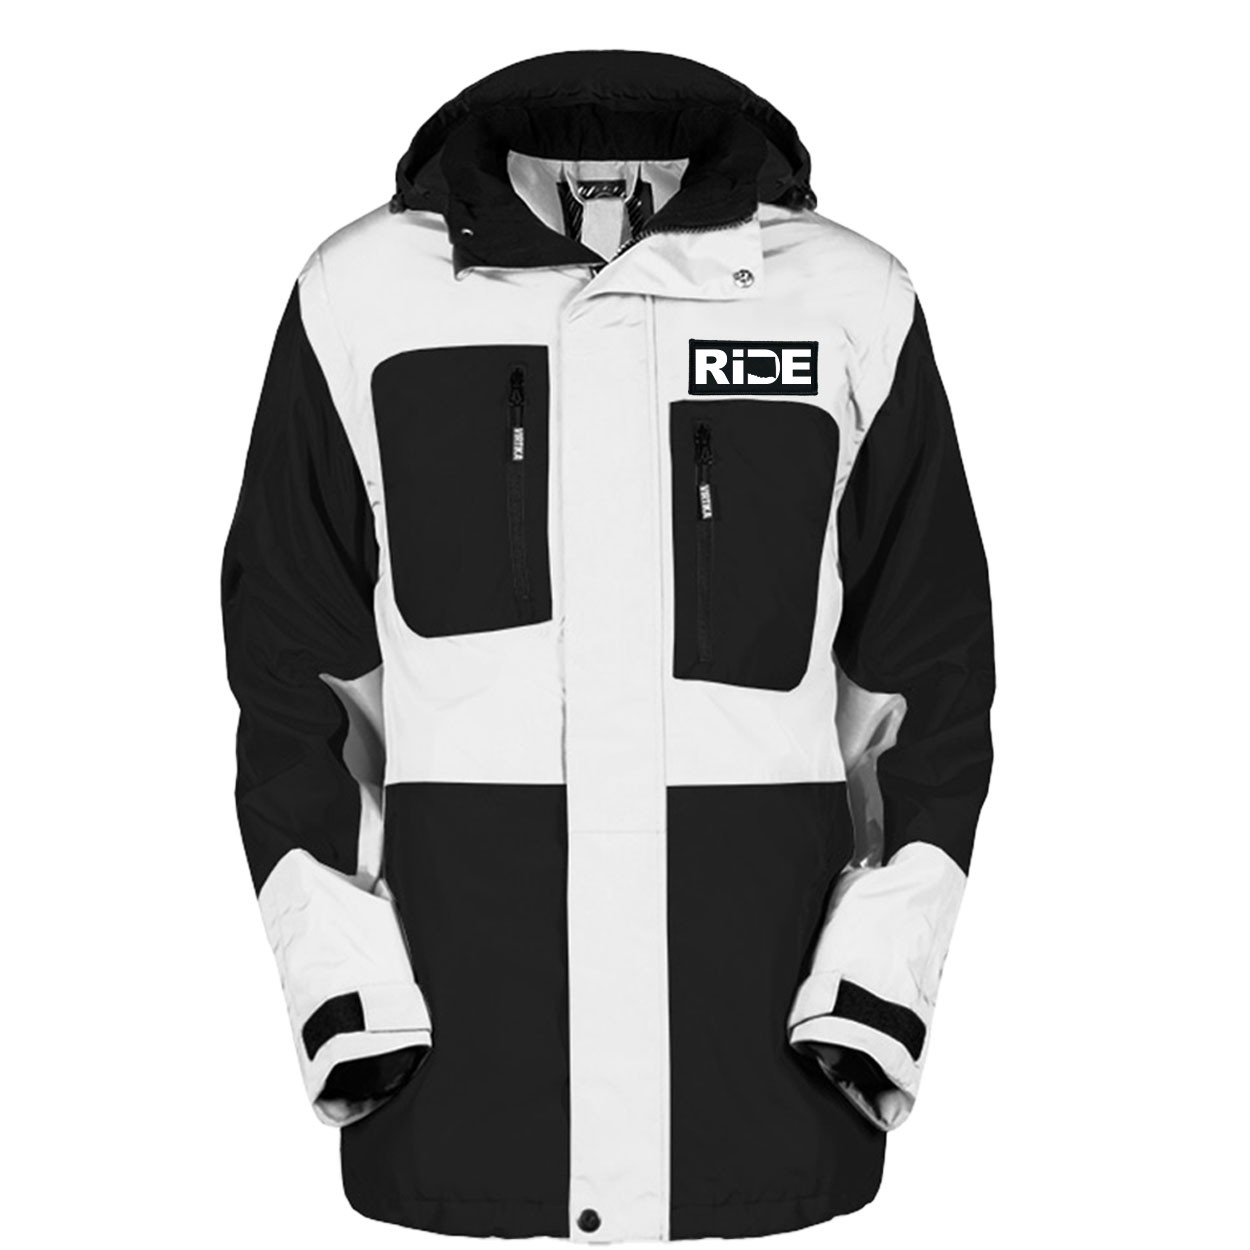 Ride Oklahoma Classic Woven Patch Pro Snowboard Jacket (Black/White)